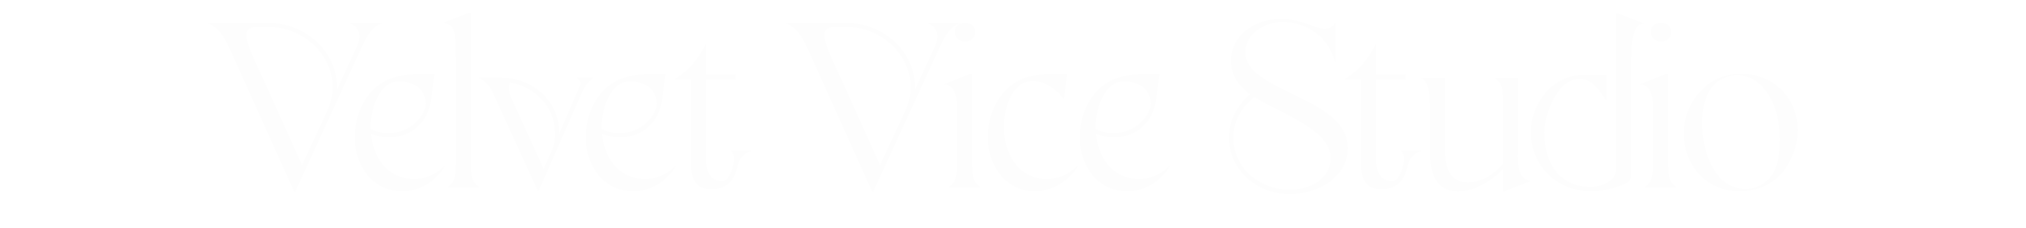 VELVET VICE STUDIO